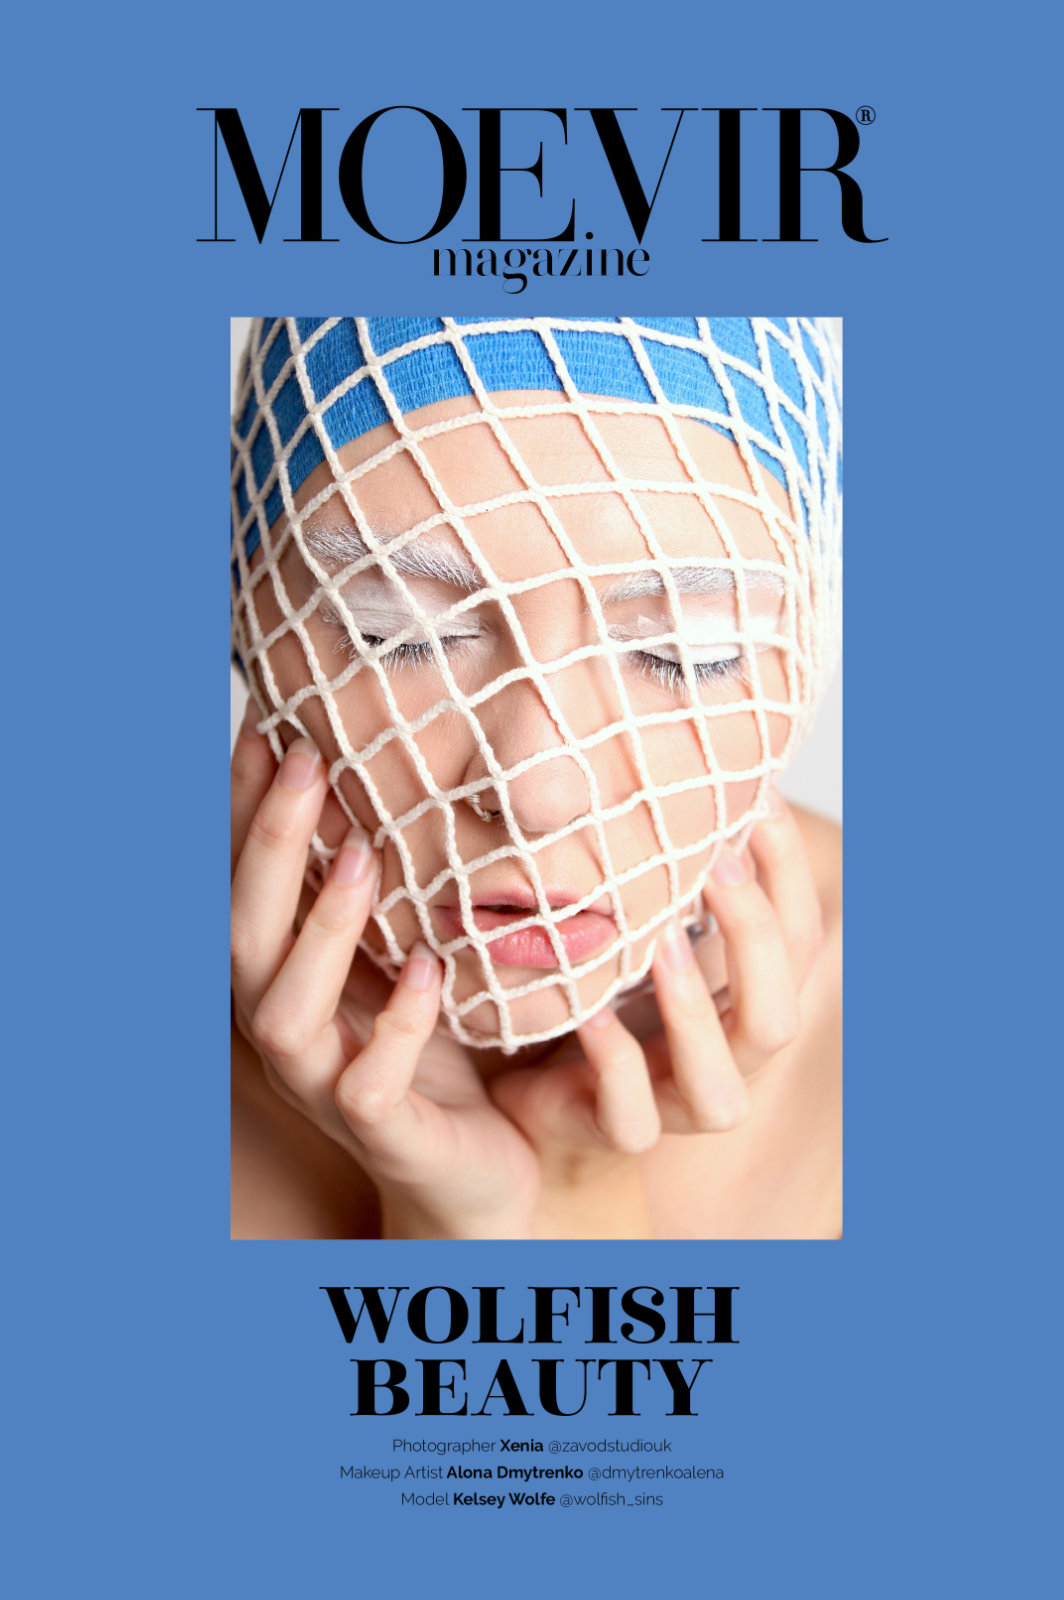 Preview image for post: Wolfish beauty ft. Makeup Artist Alona Dmytrenko | Moevir Magazine - November Issue 2022